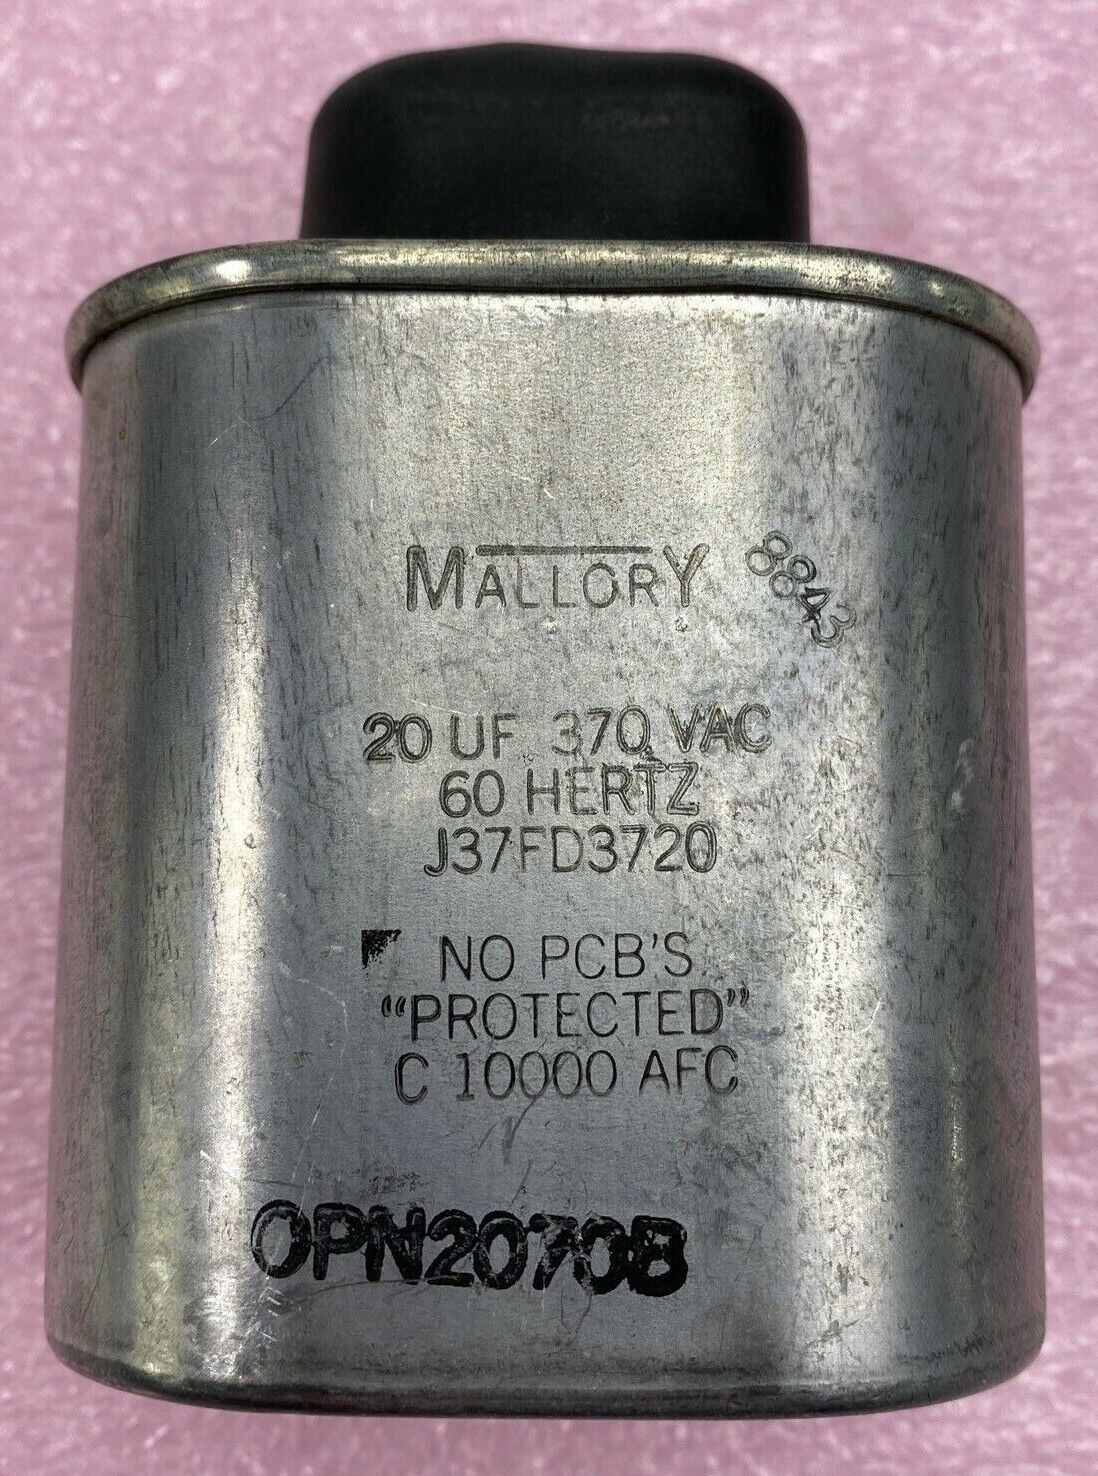 Mallory 8843 20uF 370 VAC motor capacitor J37FD3720 OPN2070B